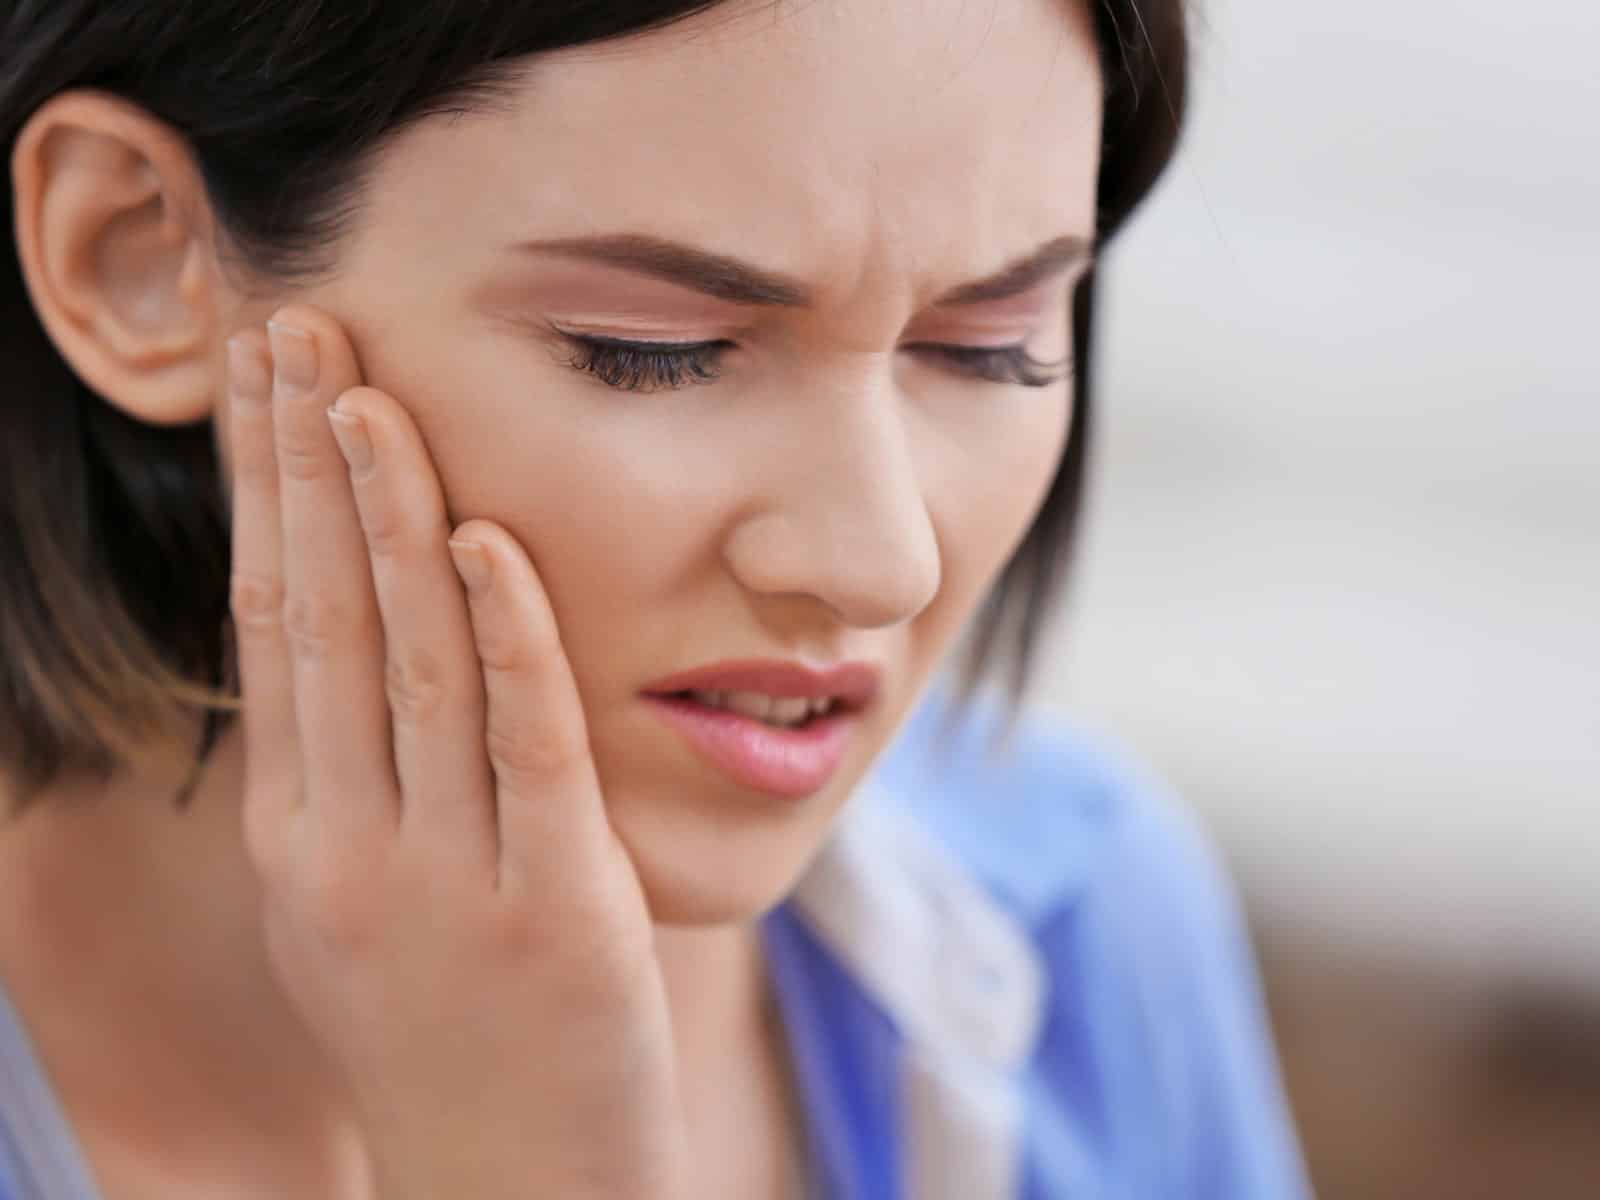 Hot n’ Cold- Treating TMJ Pain at Home